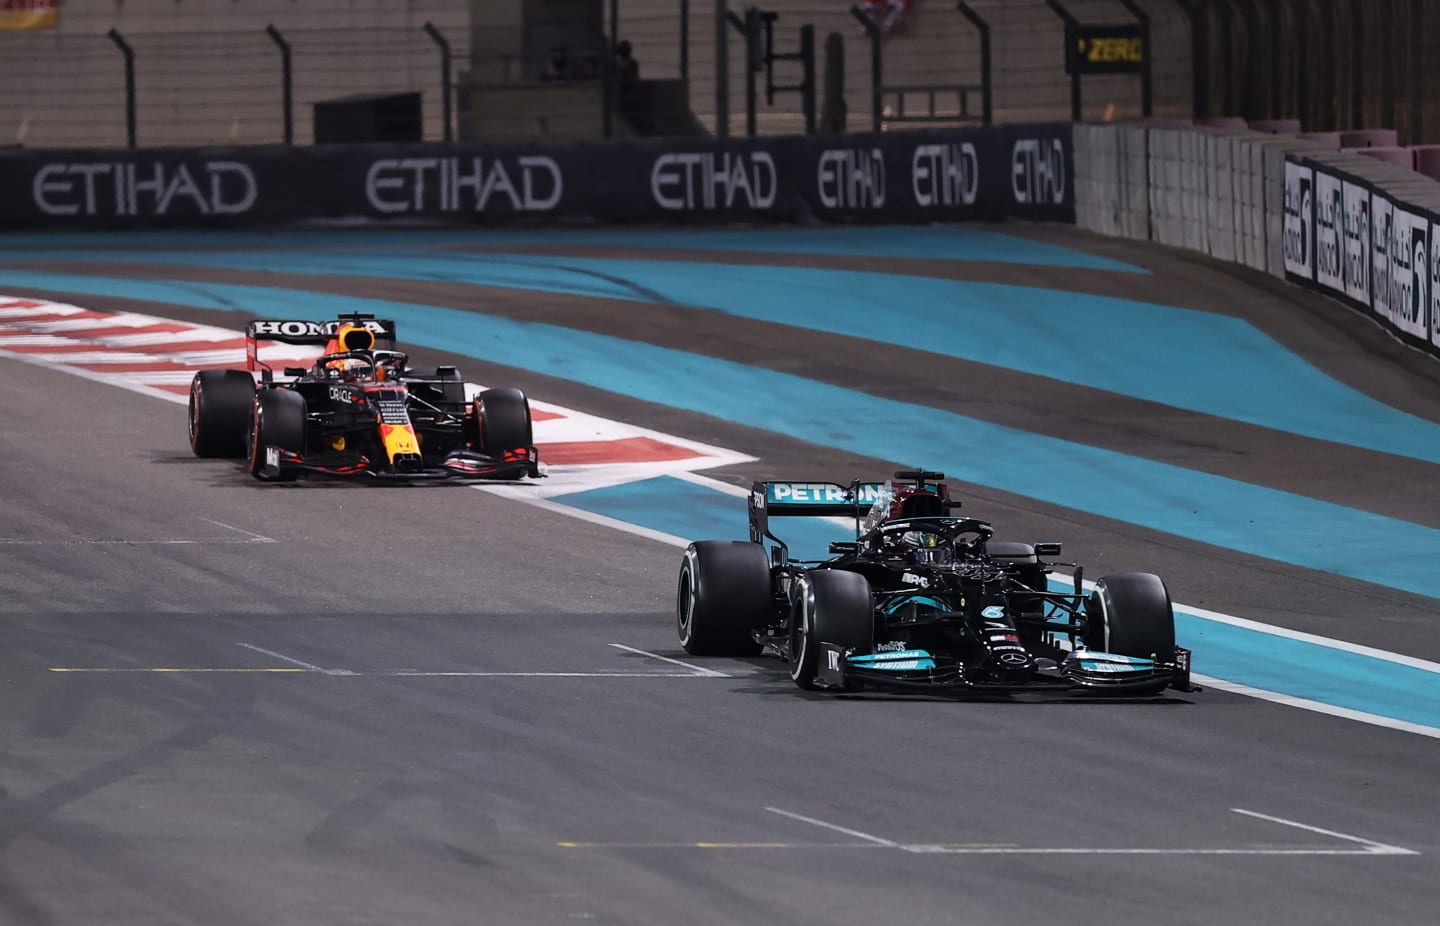 ABU DHABI, UNITED ARAB EMIRATES - DECEMBER 12: Lewis Hamilton of Great Britain driving the (44)